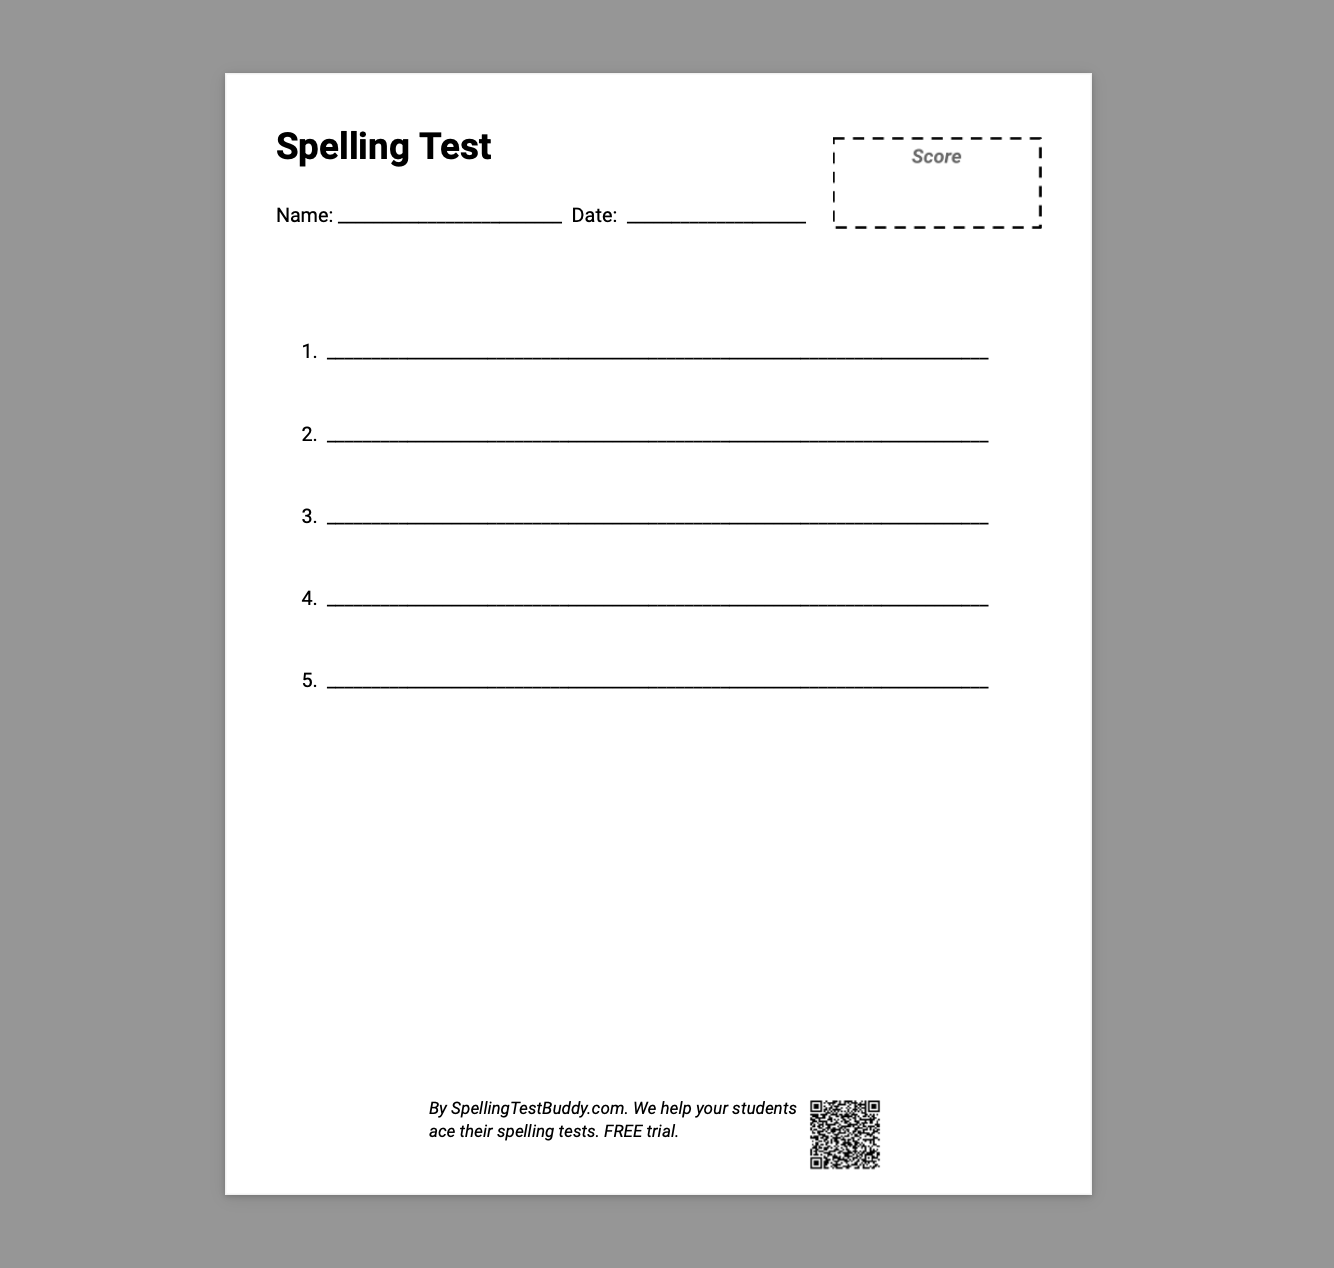 Spelling Test Paper - 5 words